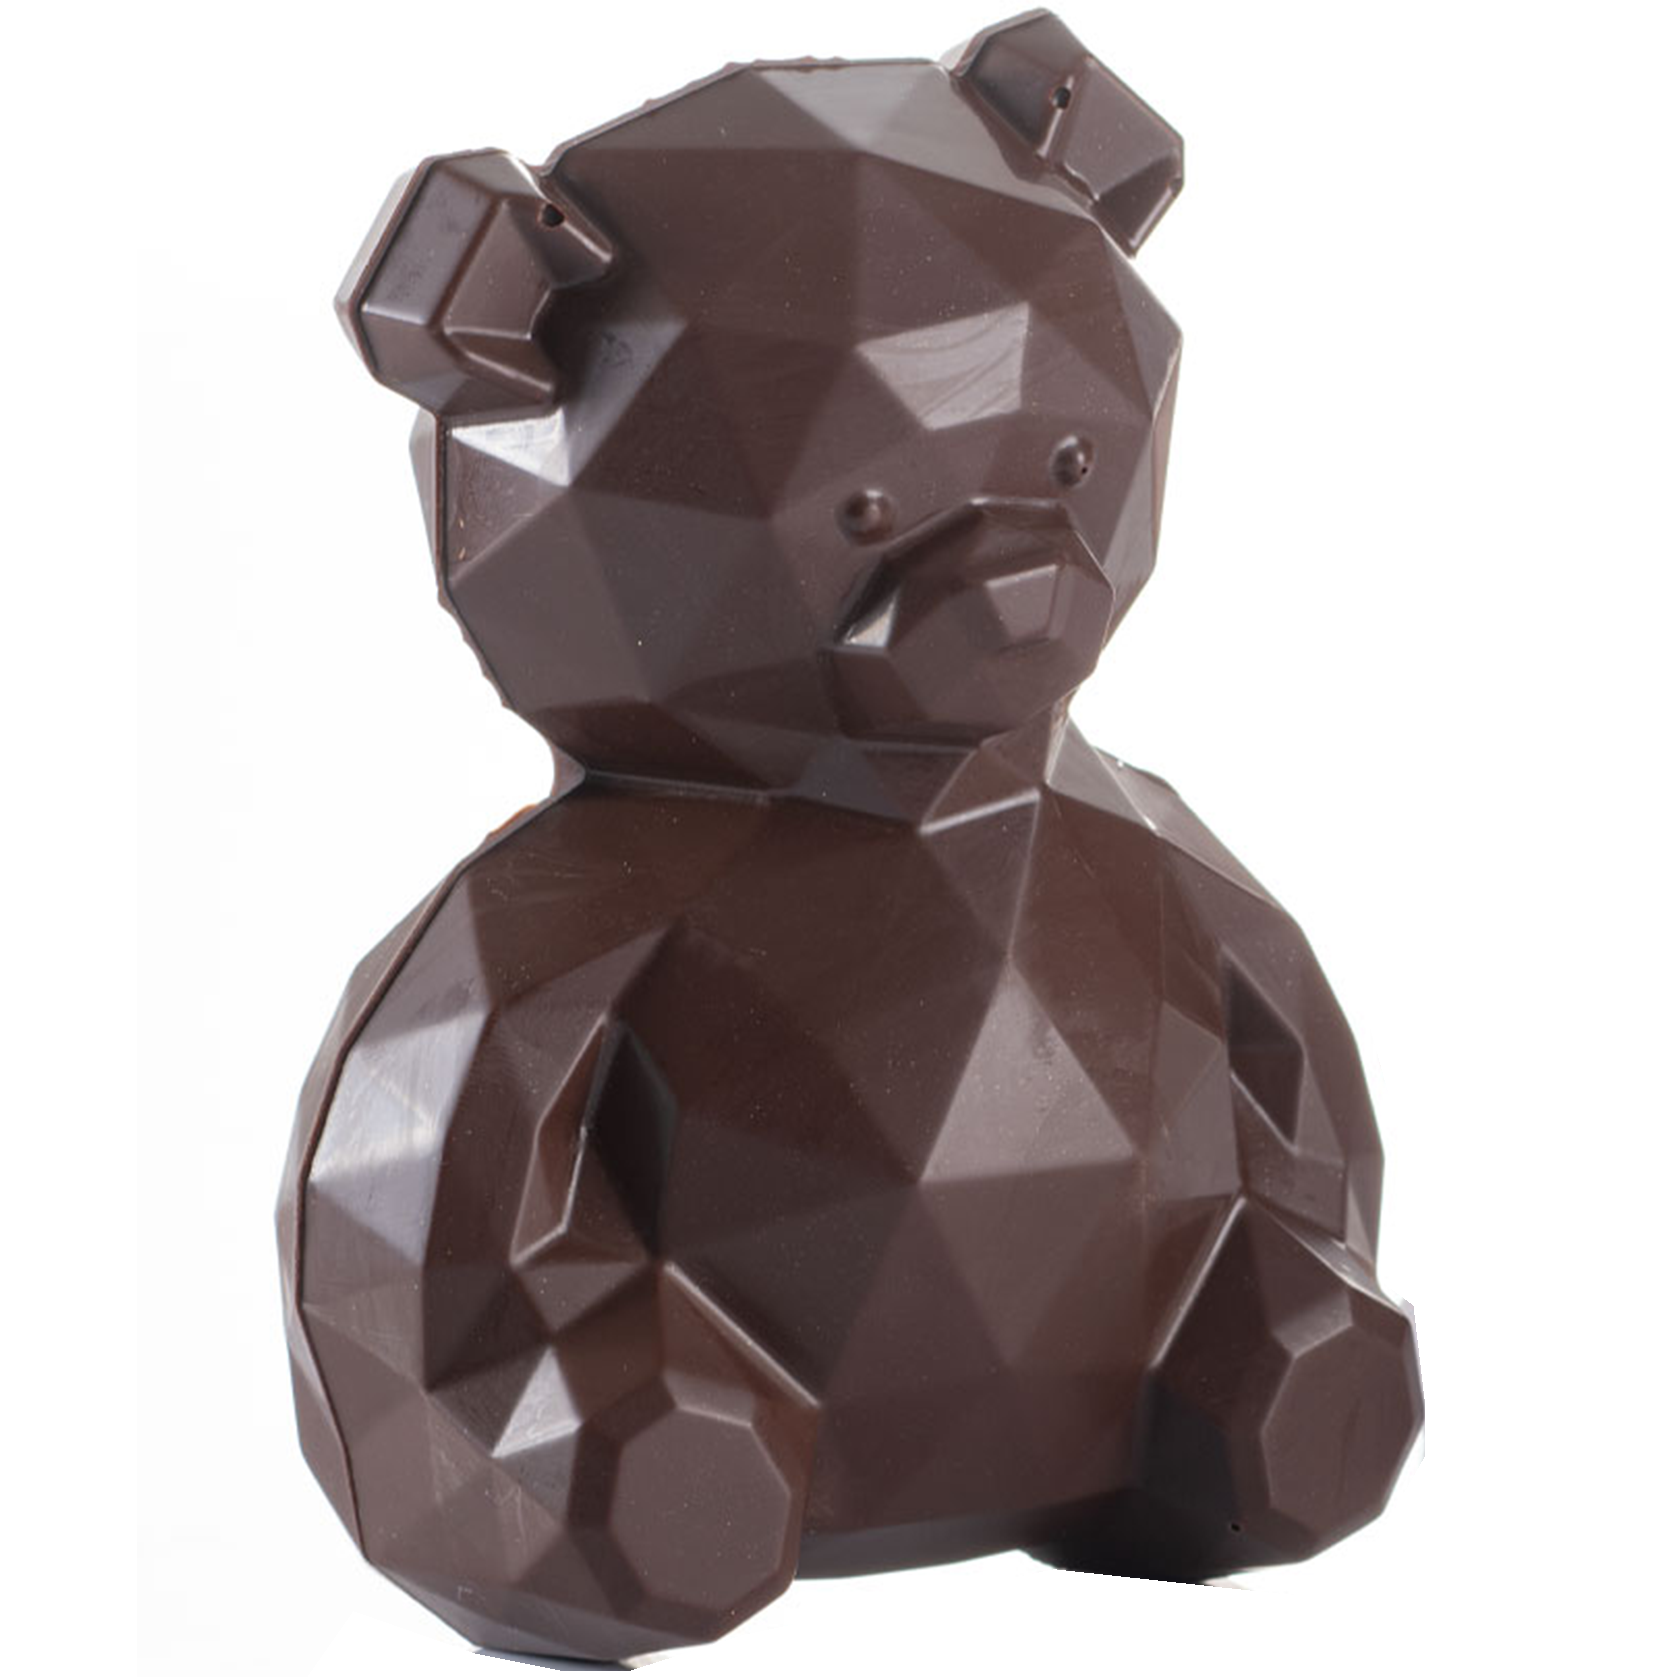 Форма для шоколада «Тедди» (Teddy) поликарбонатная MA3014, Martellato, Италия  | Фото — Магазин Andy Chef  1